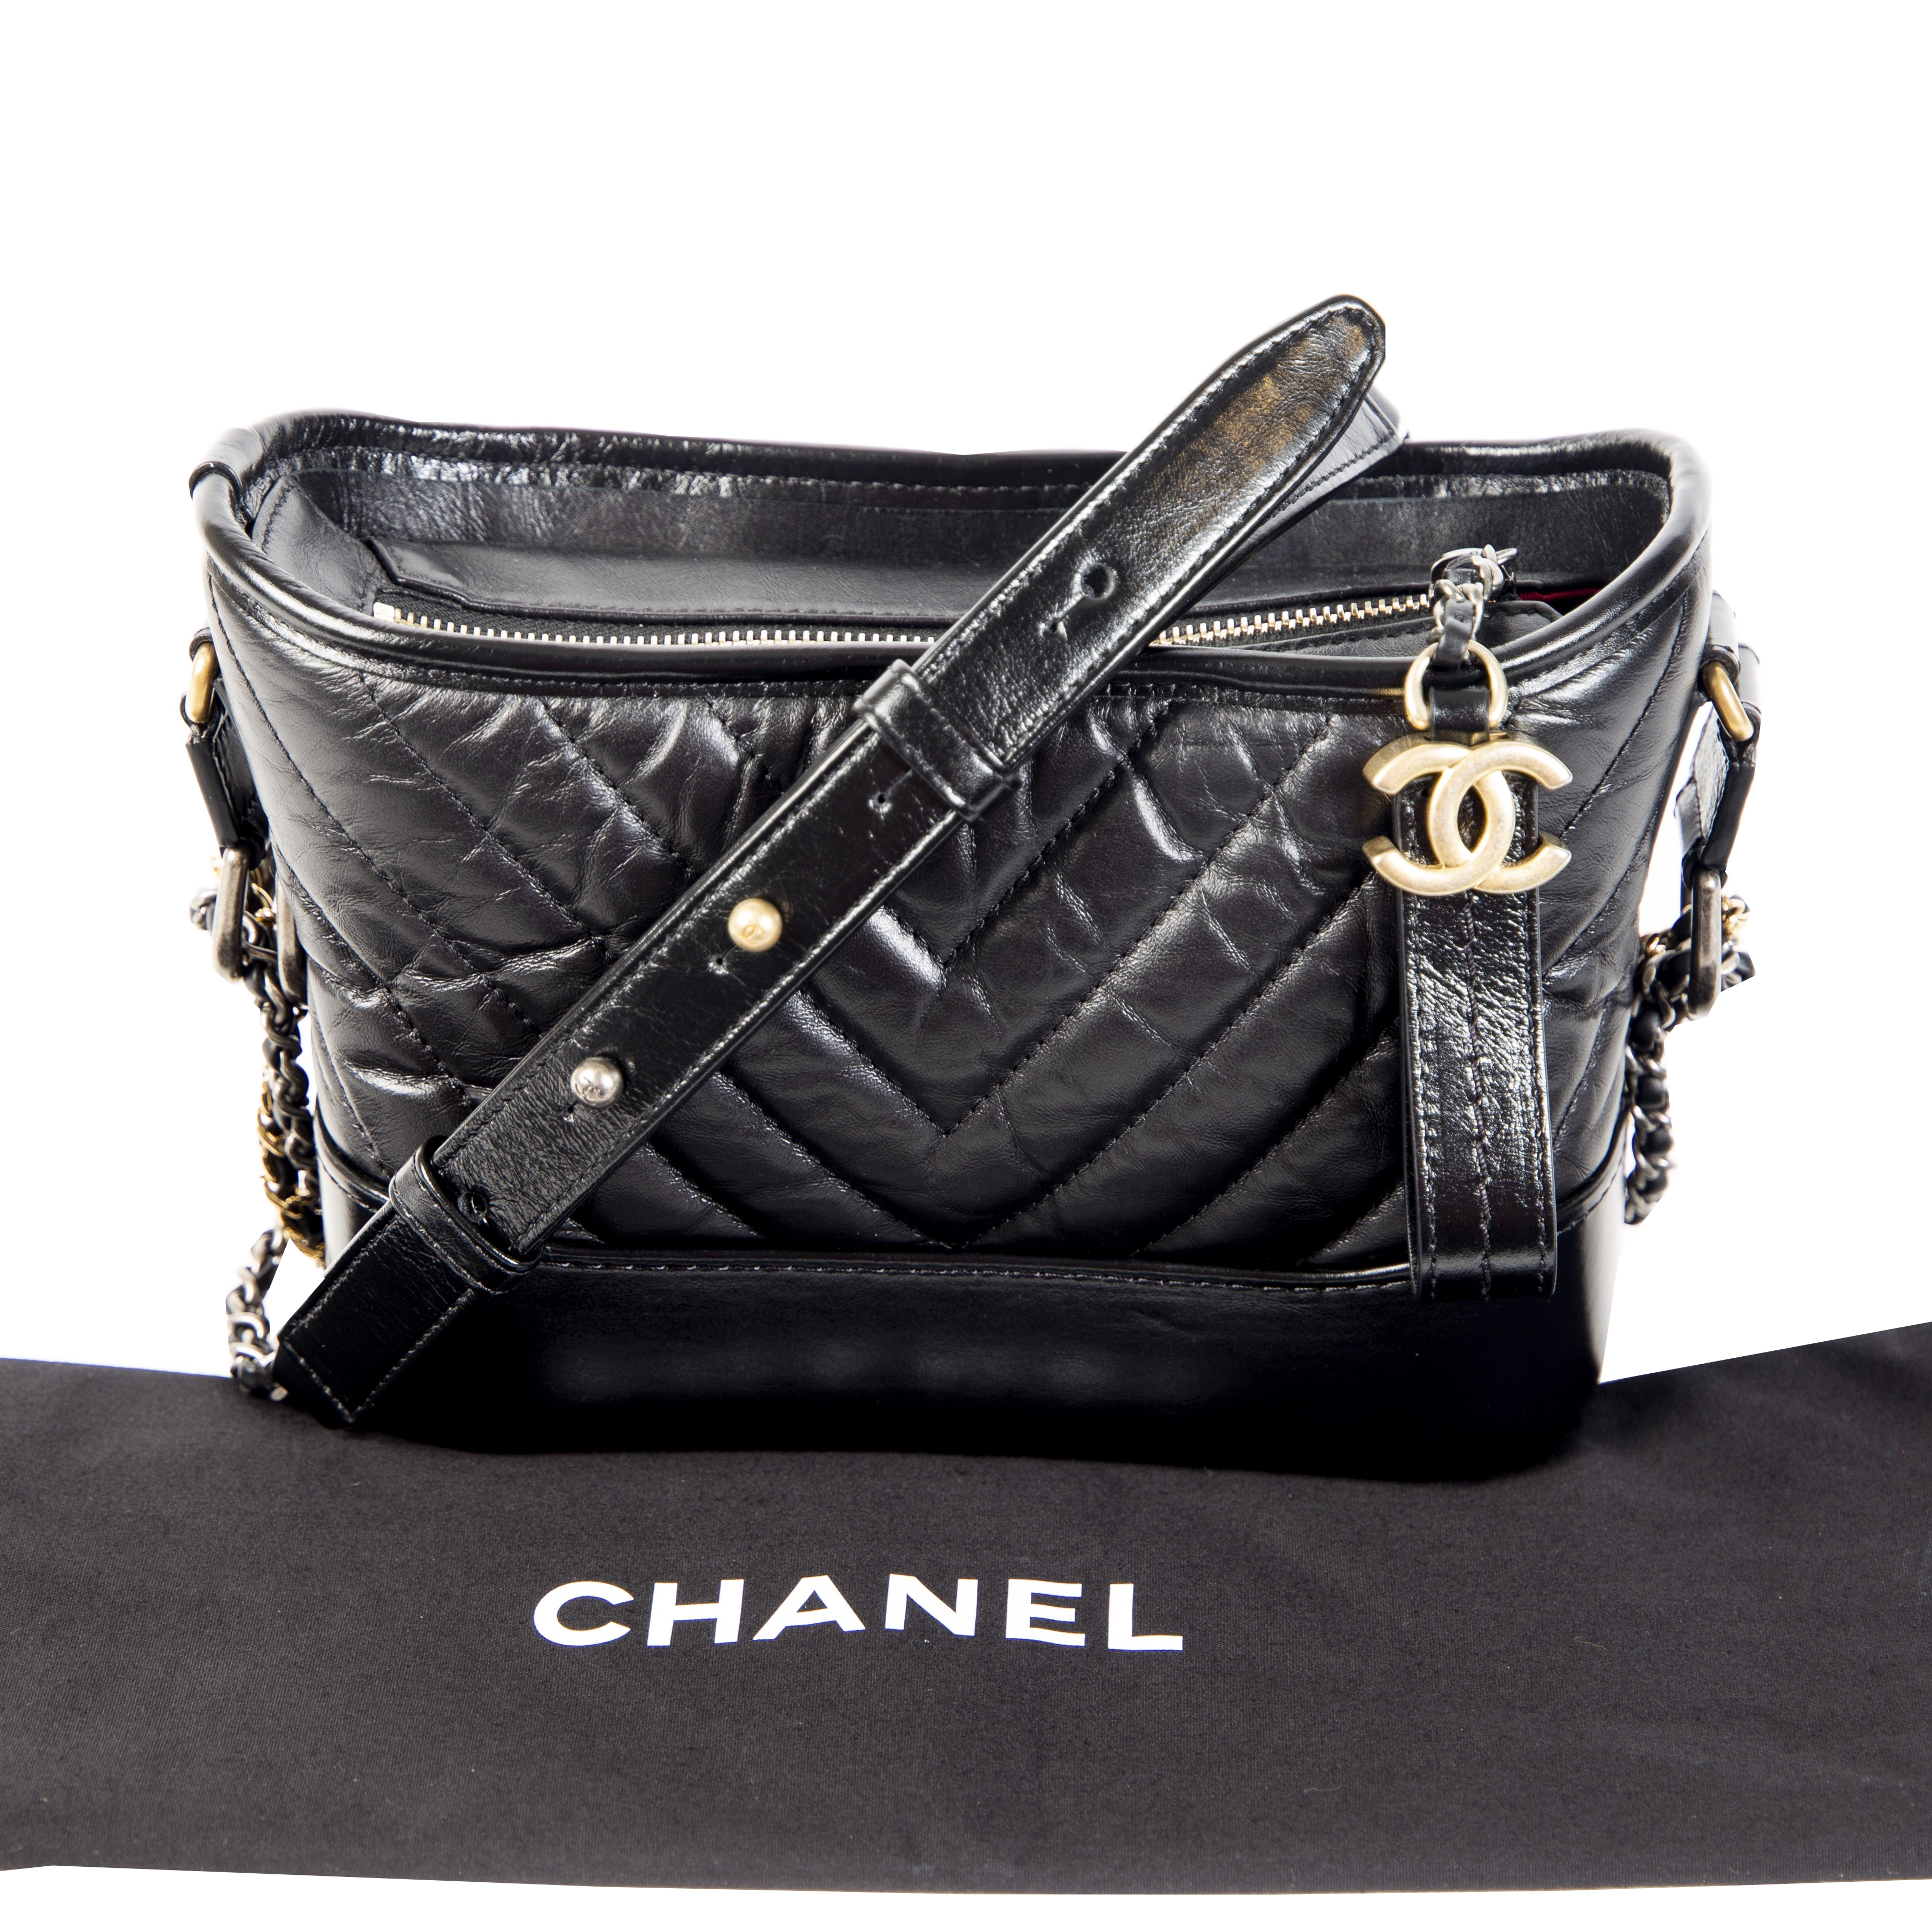 A Chanel Gabrielle Hobo bag 2018. - Bukowskis